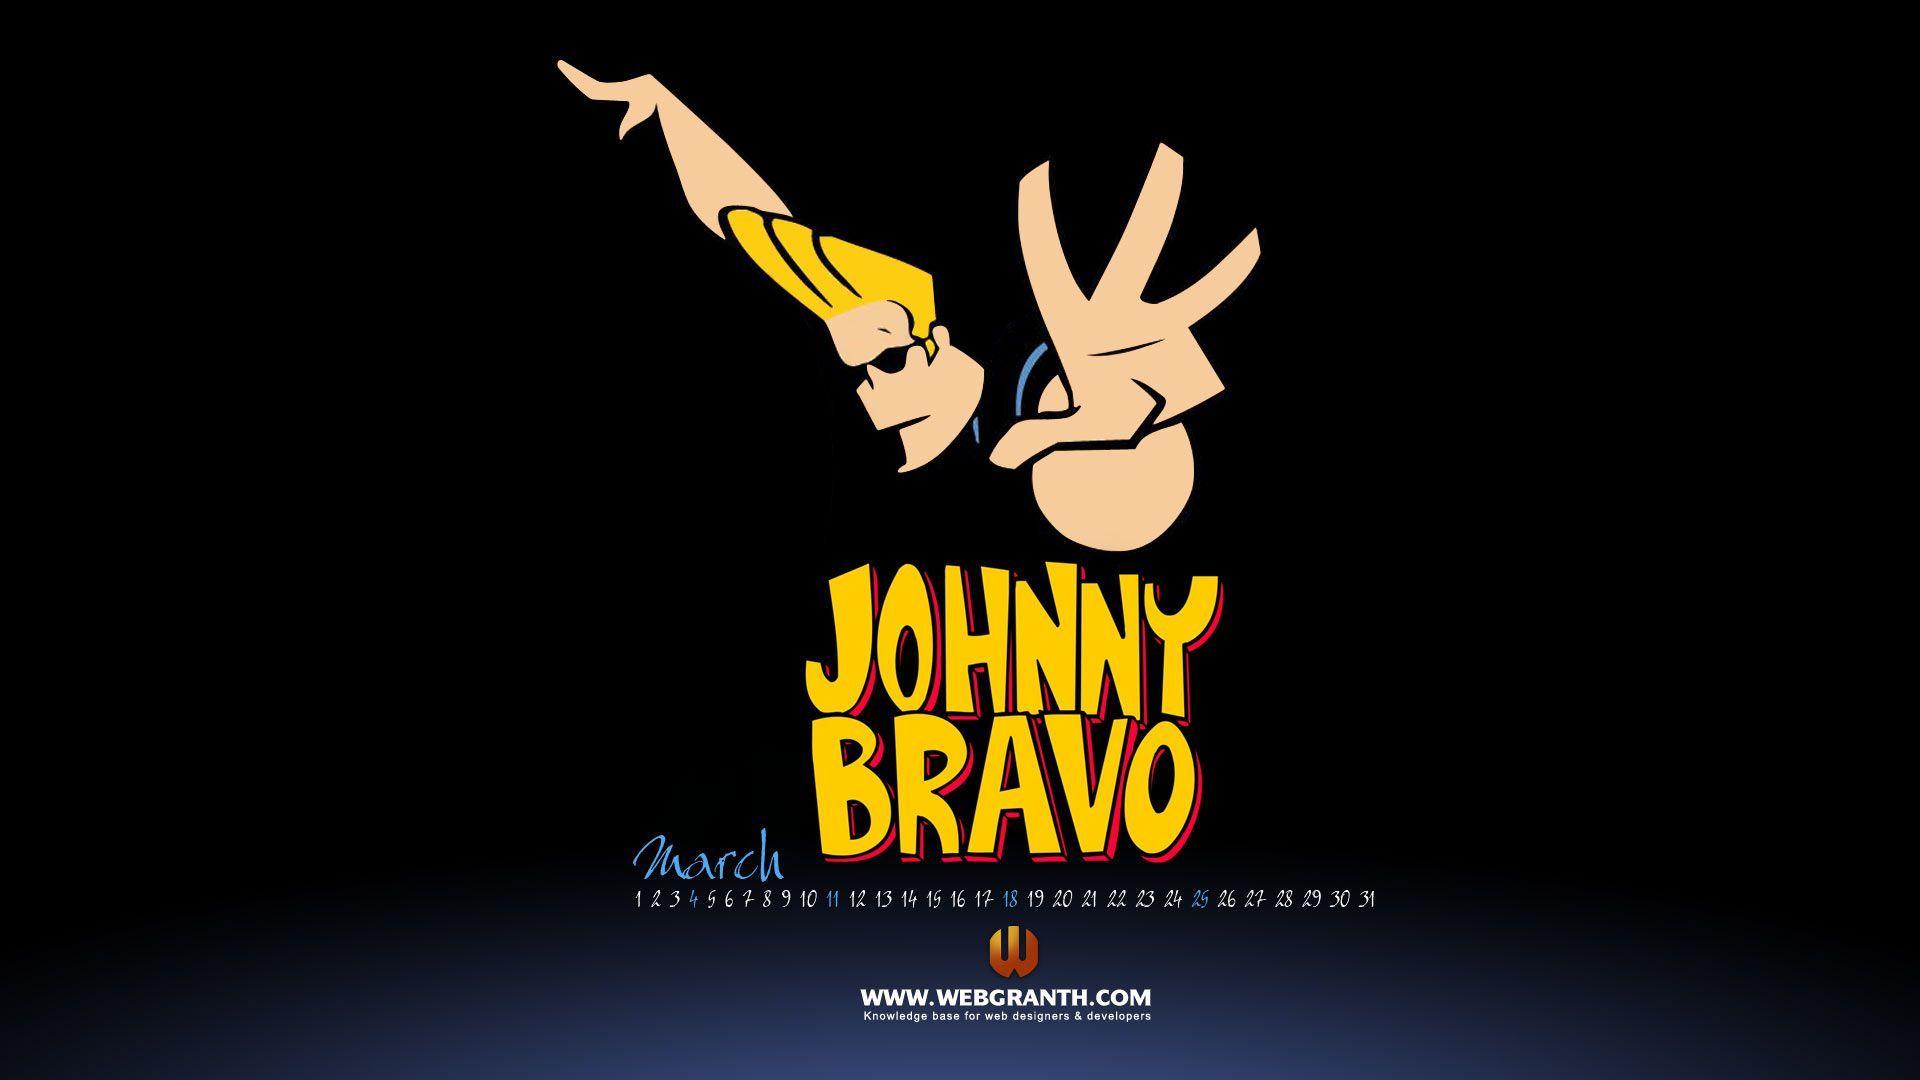 Bravo HD Logo - Johnny Bravo Wallpapers - Wallpaper Cave